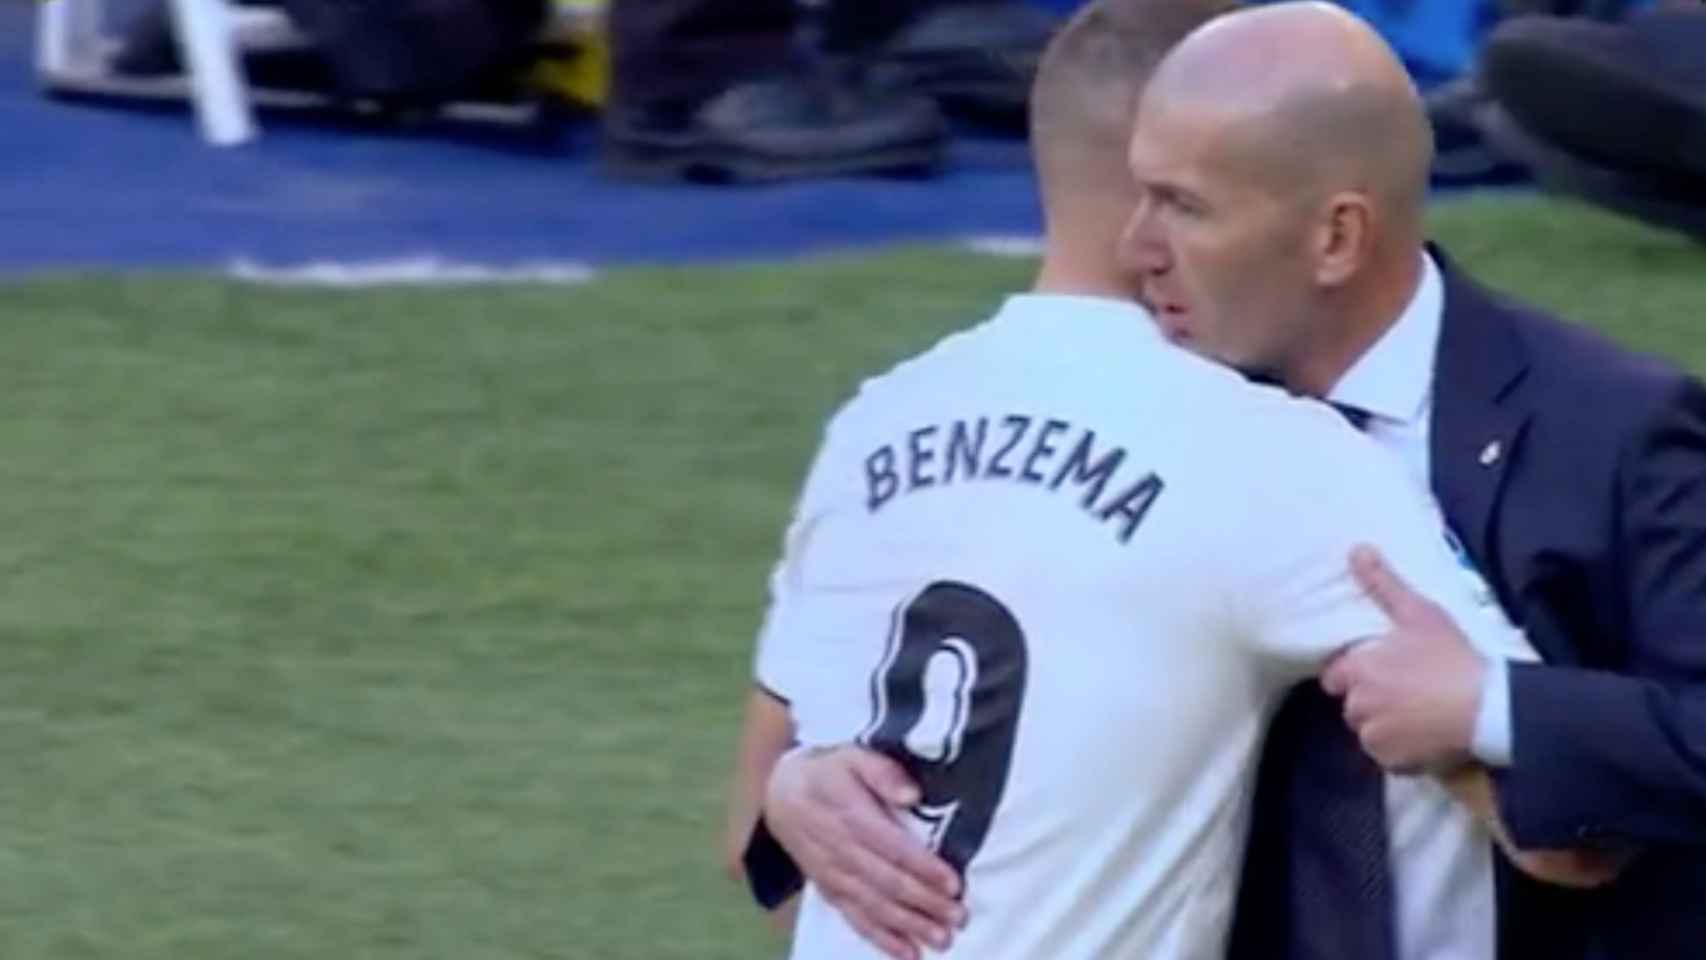 Abrazo de Zidane a Benzema